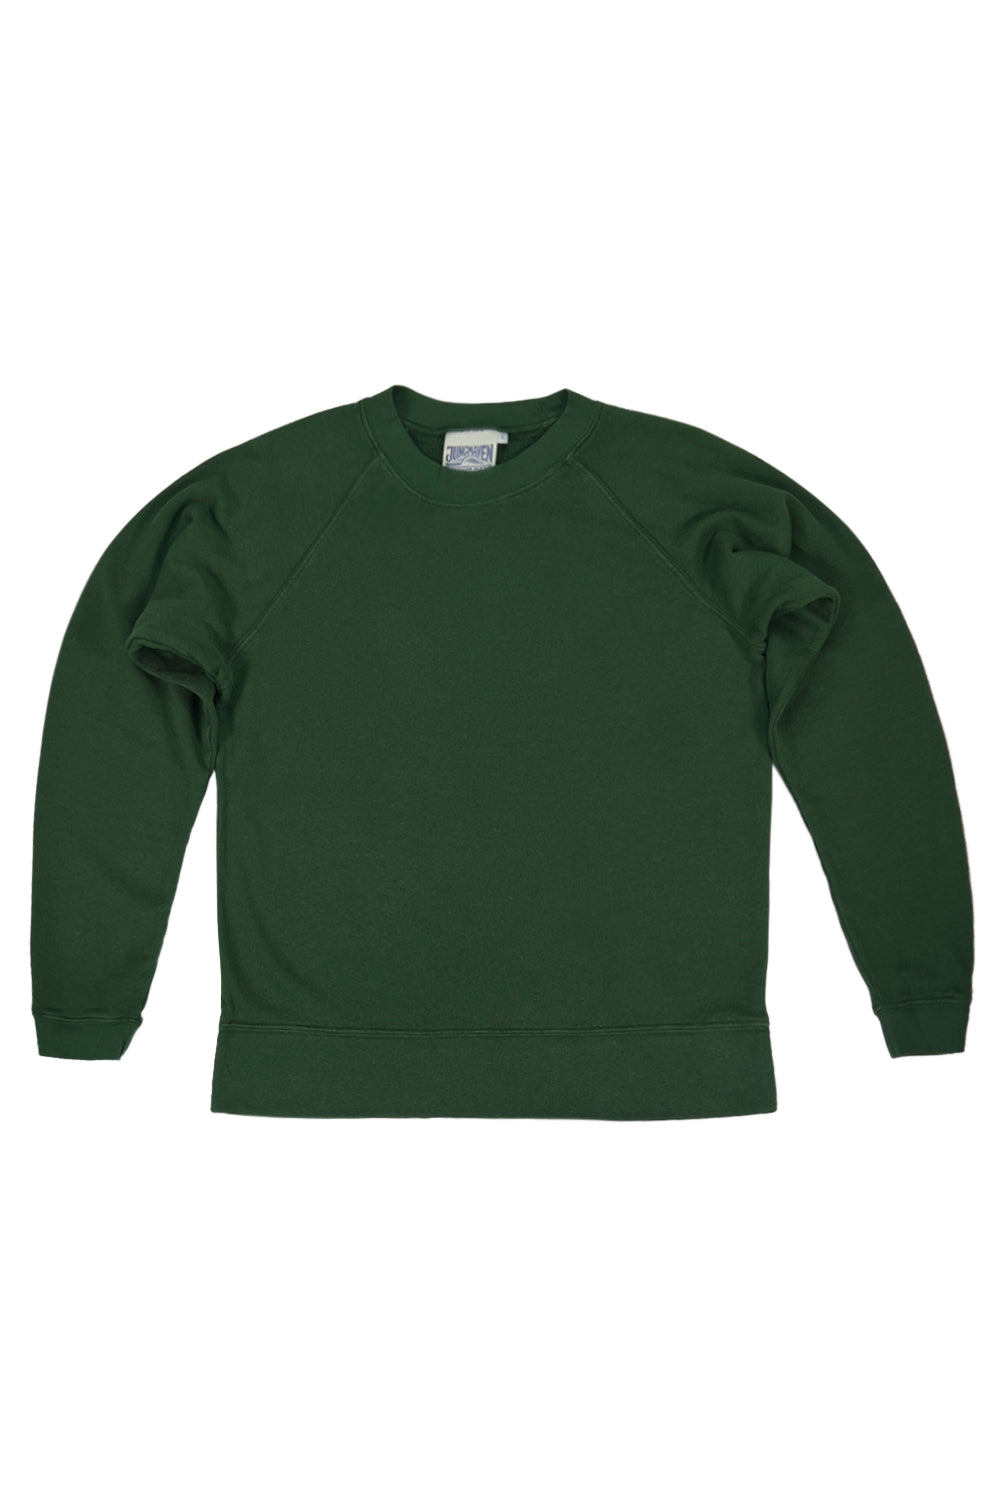 Sierra Raglan Sweatshirt | Jungmaven Hemp Clothing & Accessories / Color: Hunter Green